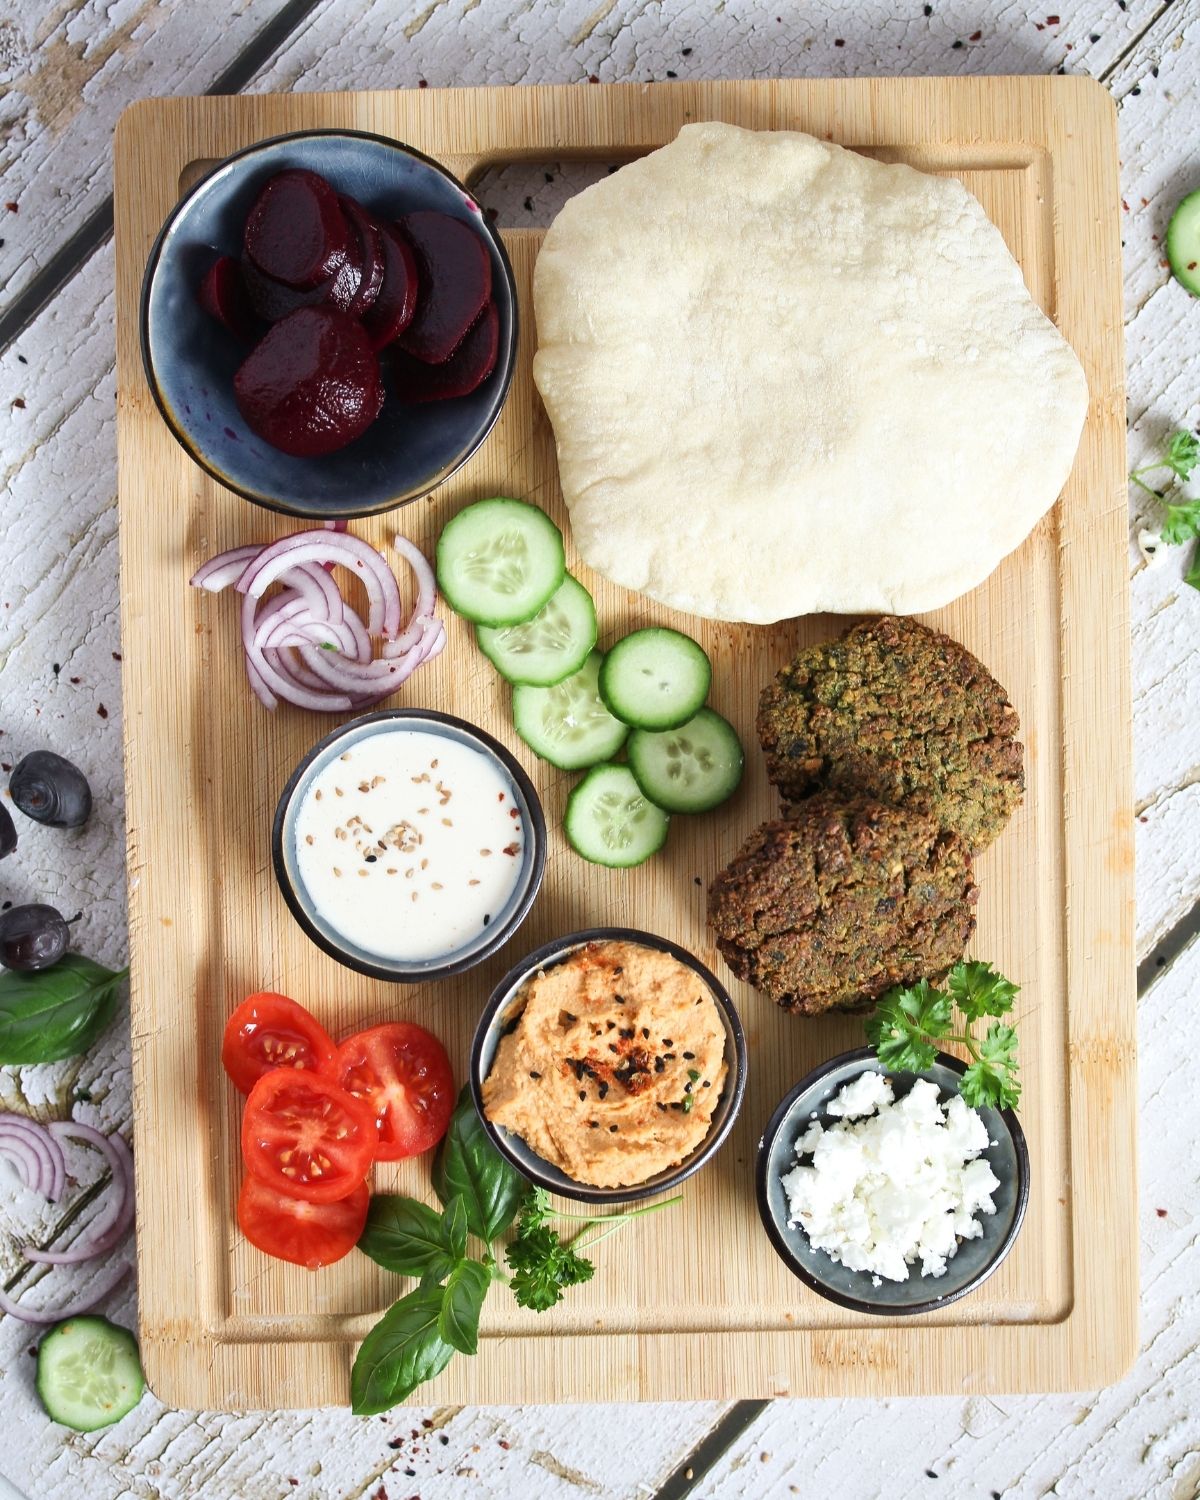 ingredients for making falafel sandwich on a wooden board overhead view.